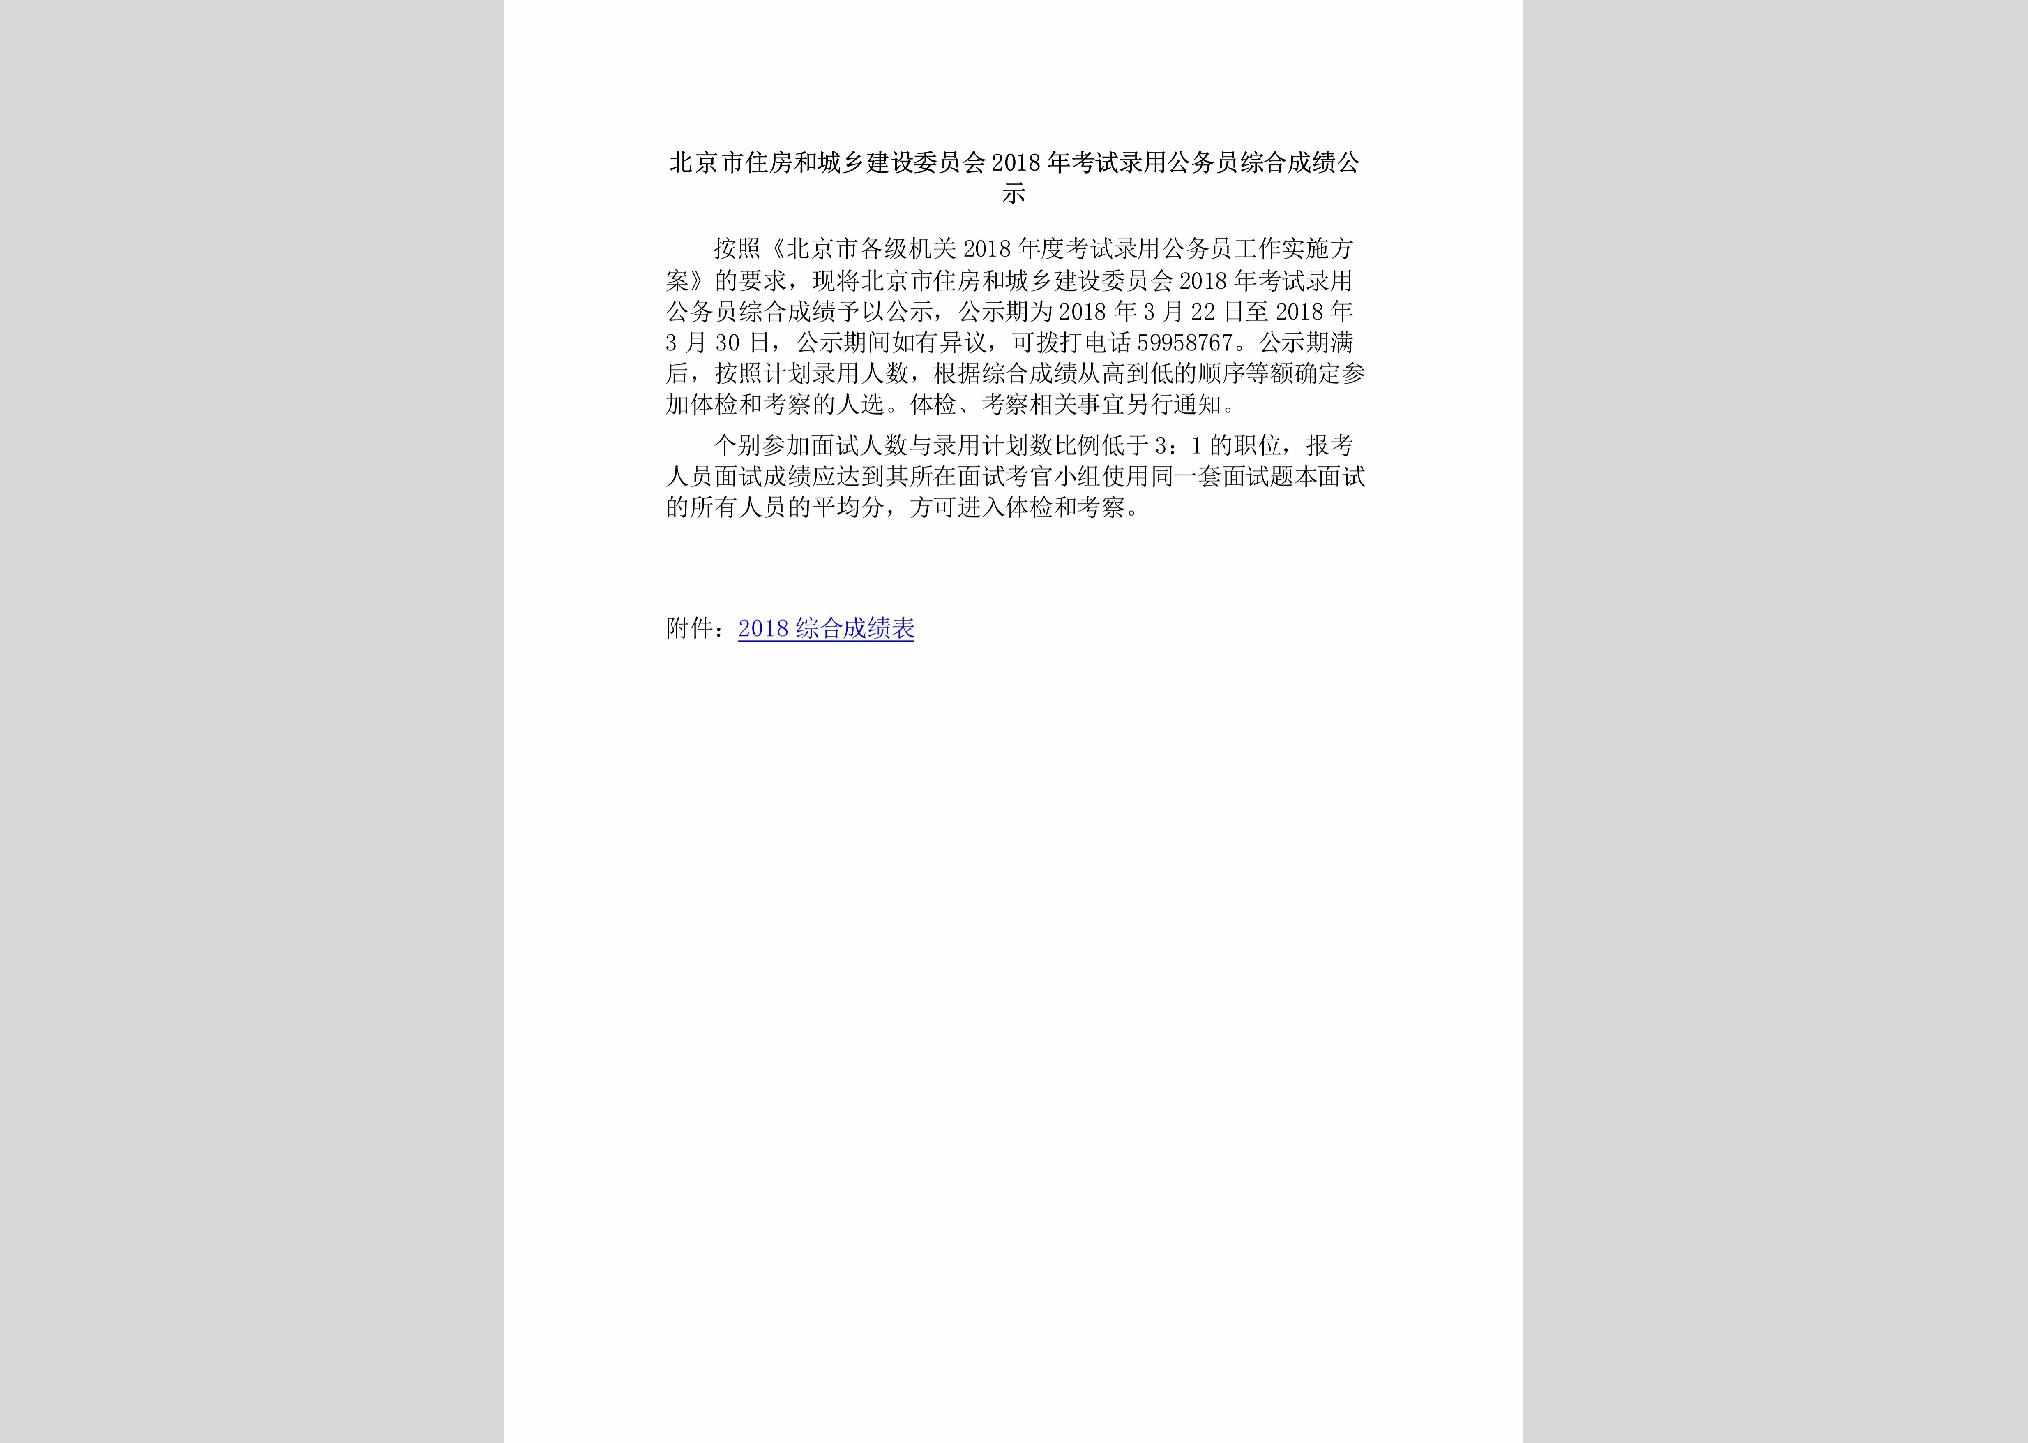 BJ-KSLYGWYZ-2018：北京市住房和城乡建设委员会2018年考试录用公务员综合成绩公示